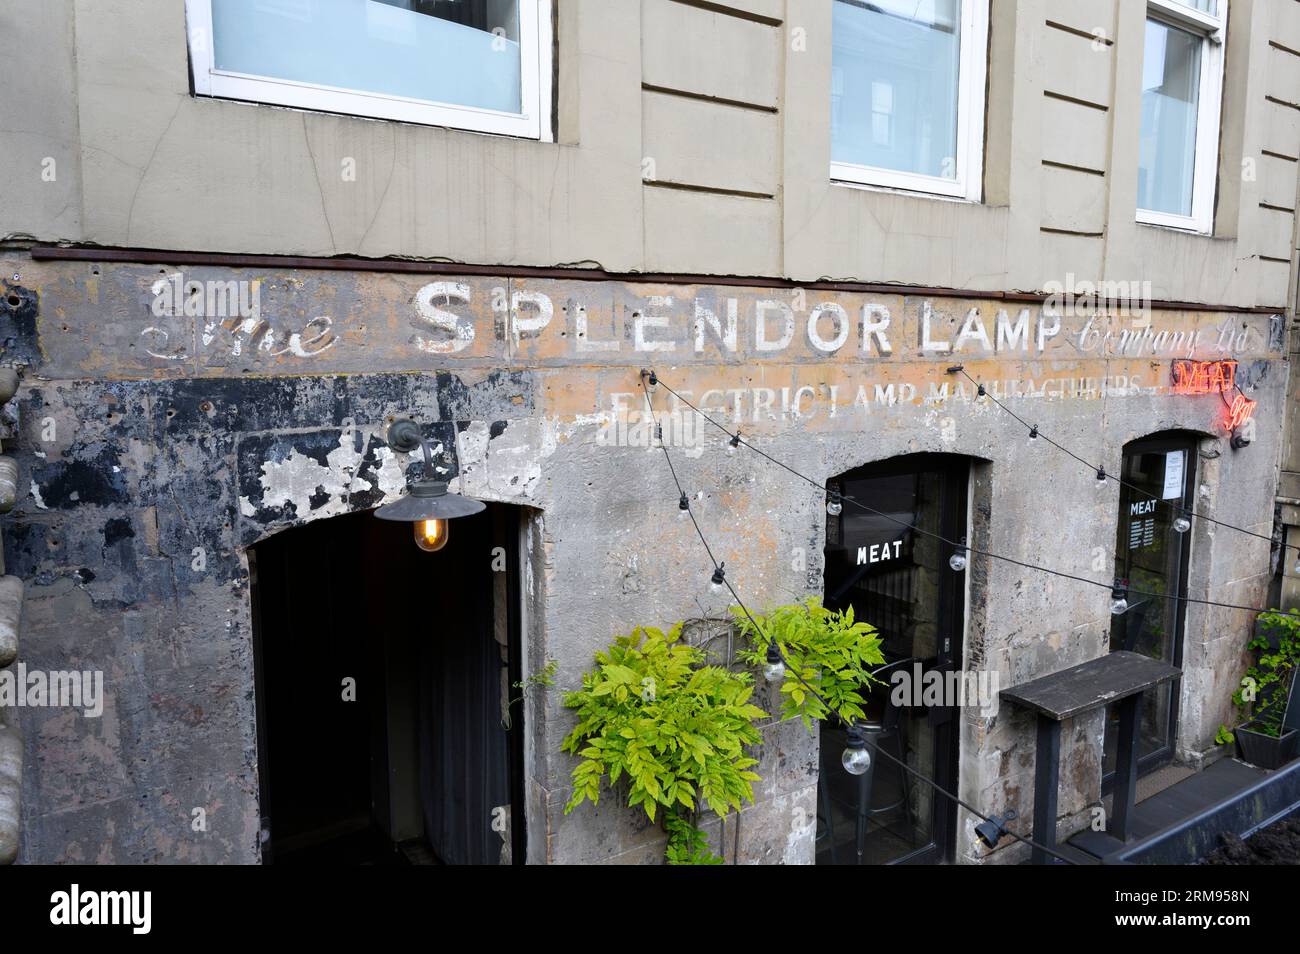 Splendor Lamp Company ghost sign above the Meat Bar restaurant, West Regent Street, Glasgow, Scotland, UK, Europe Stock Photo